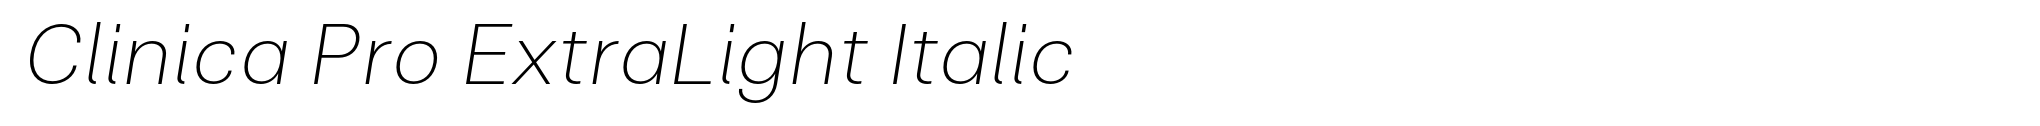 Clinica Pro ExtraLight Italic image